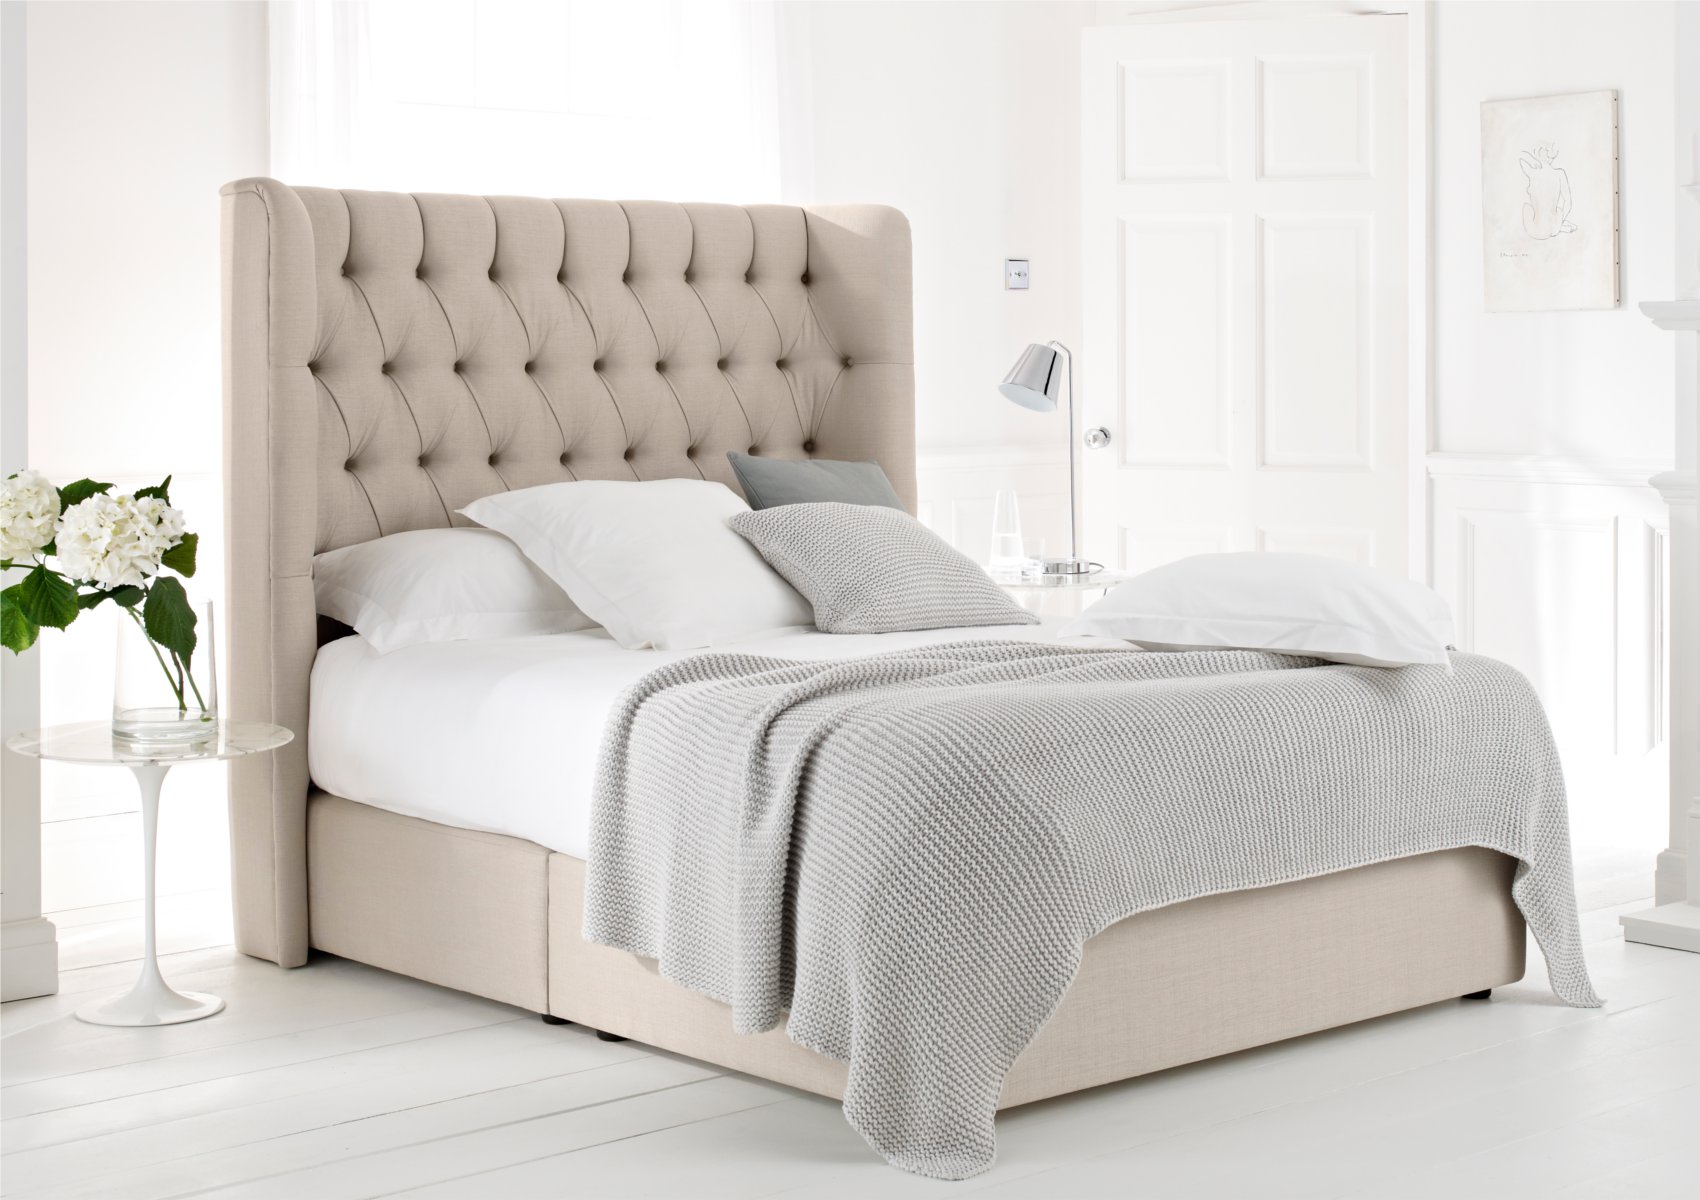 View Knightsbridge Harbour Grey Upholstered Double Divan Bed Time4Sleep information